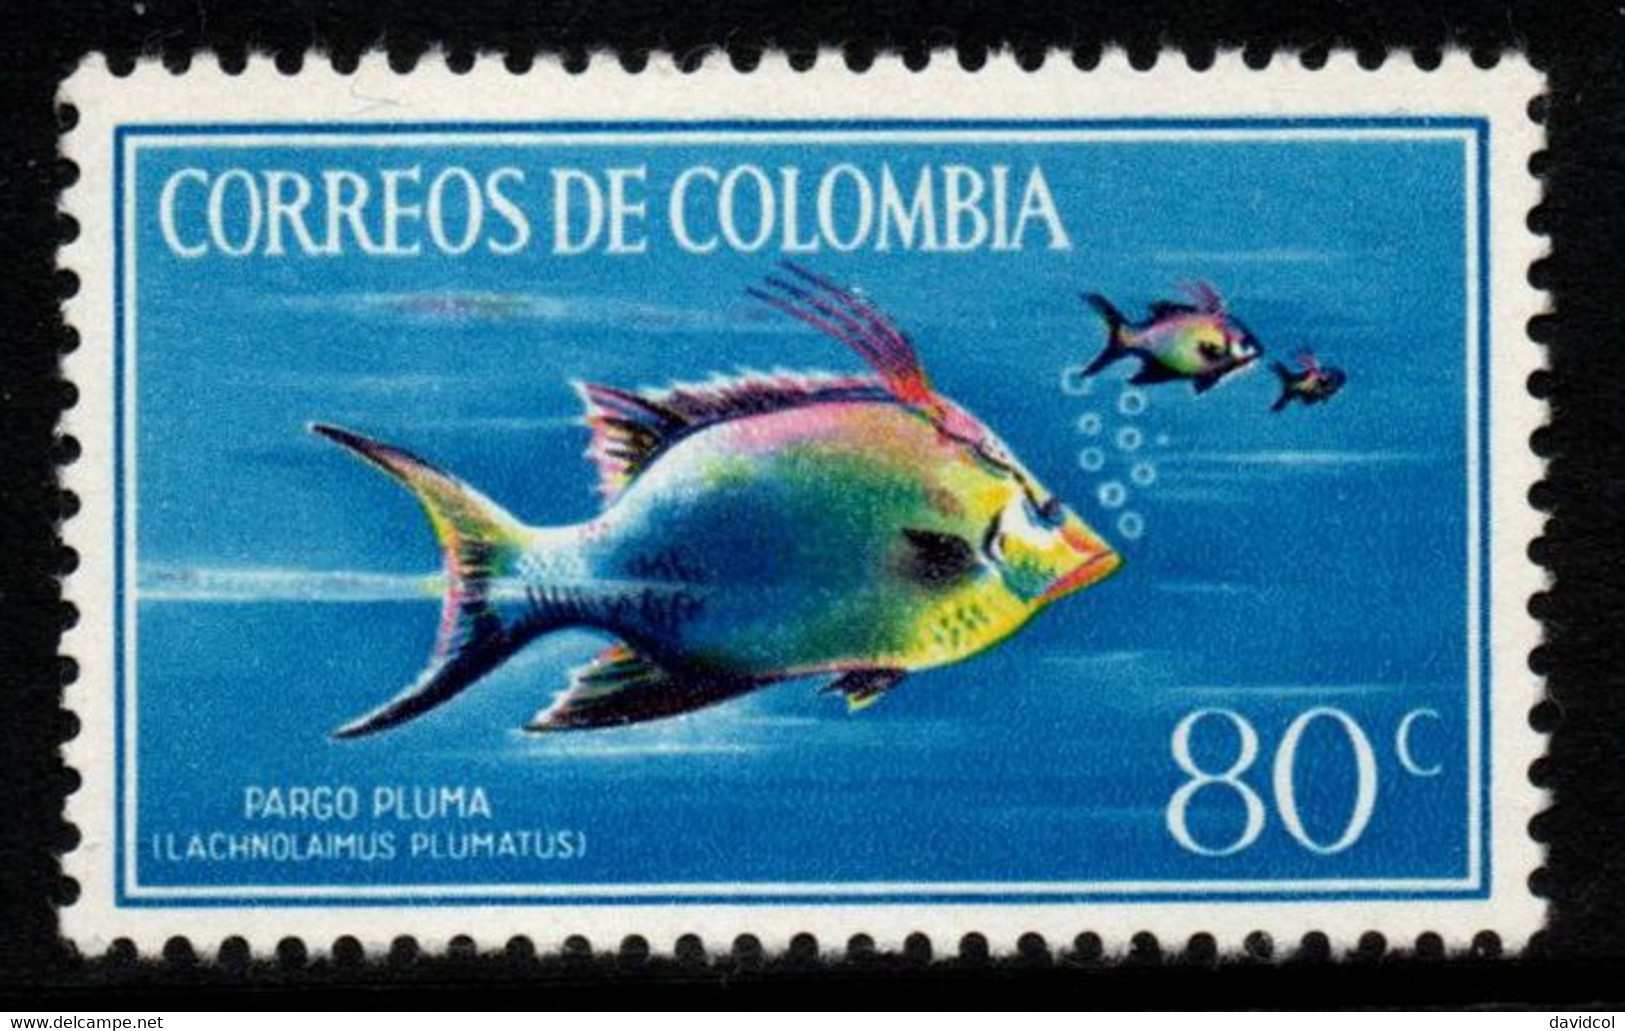 05A- KOLUMBIEN – 1966- MI#:1078 - MNH- PARGO PLUMA (LACHNOLAIMUS PLUMATUS) - FISHES. MARINE LIFE / FAUNA / FISH - Colombie